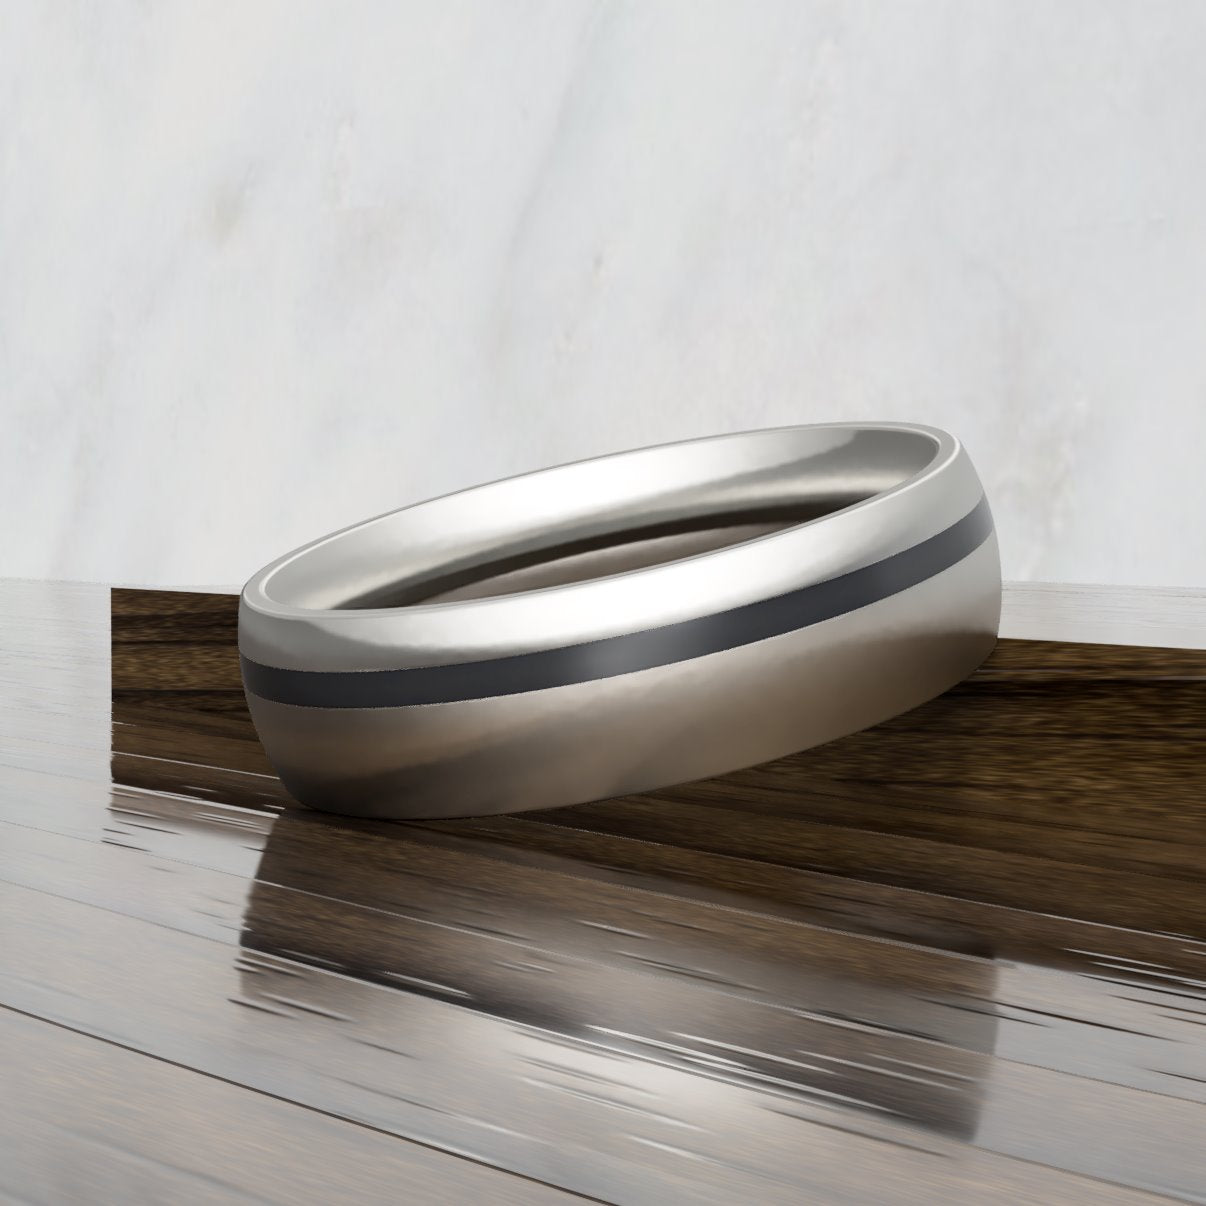 X238 Støberi Custom Ring: Domed 'Eero' 14kRG